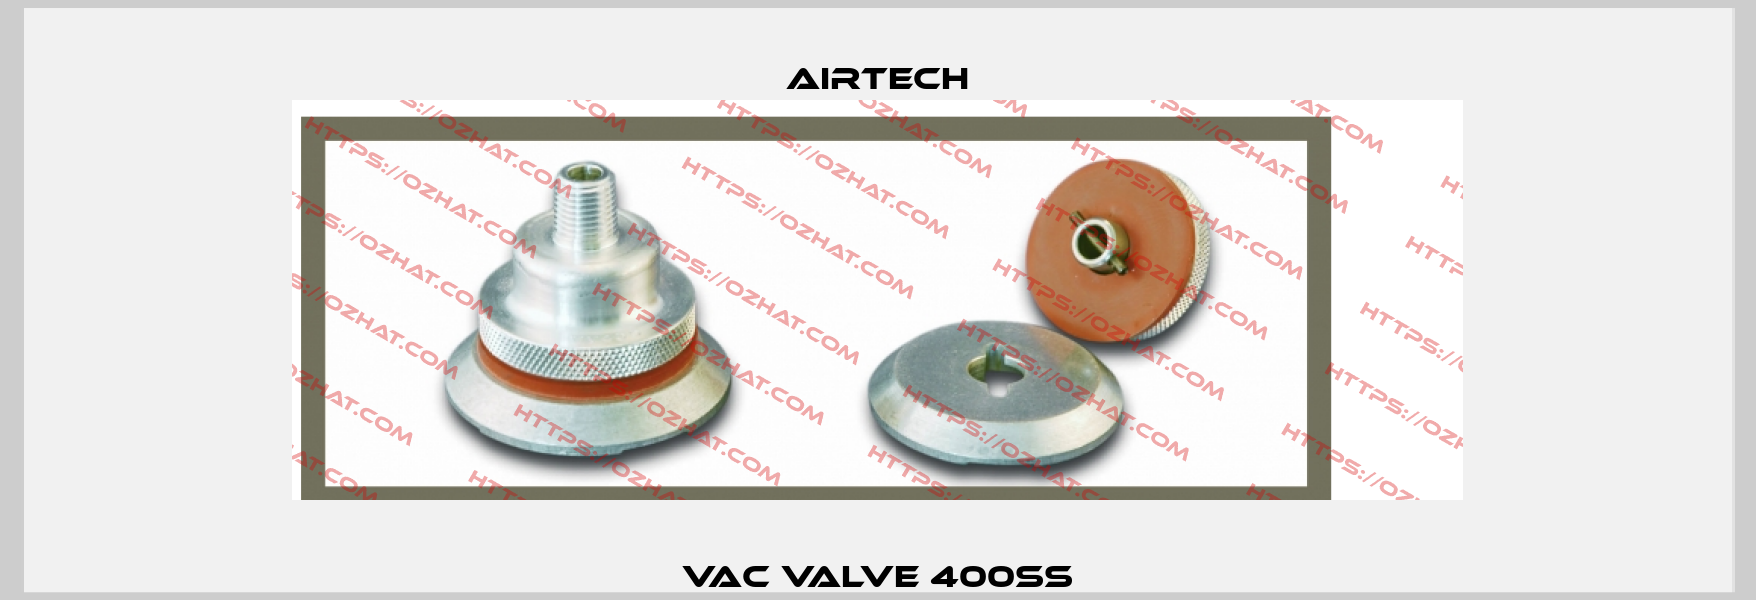 Vac Valve 400SS Airtech